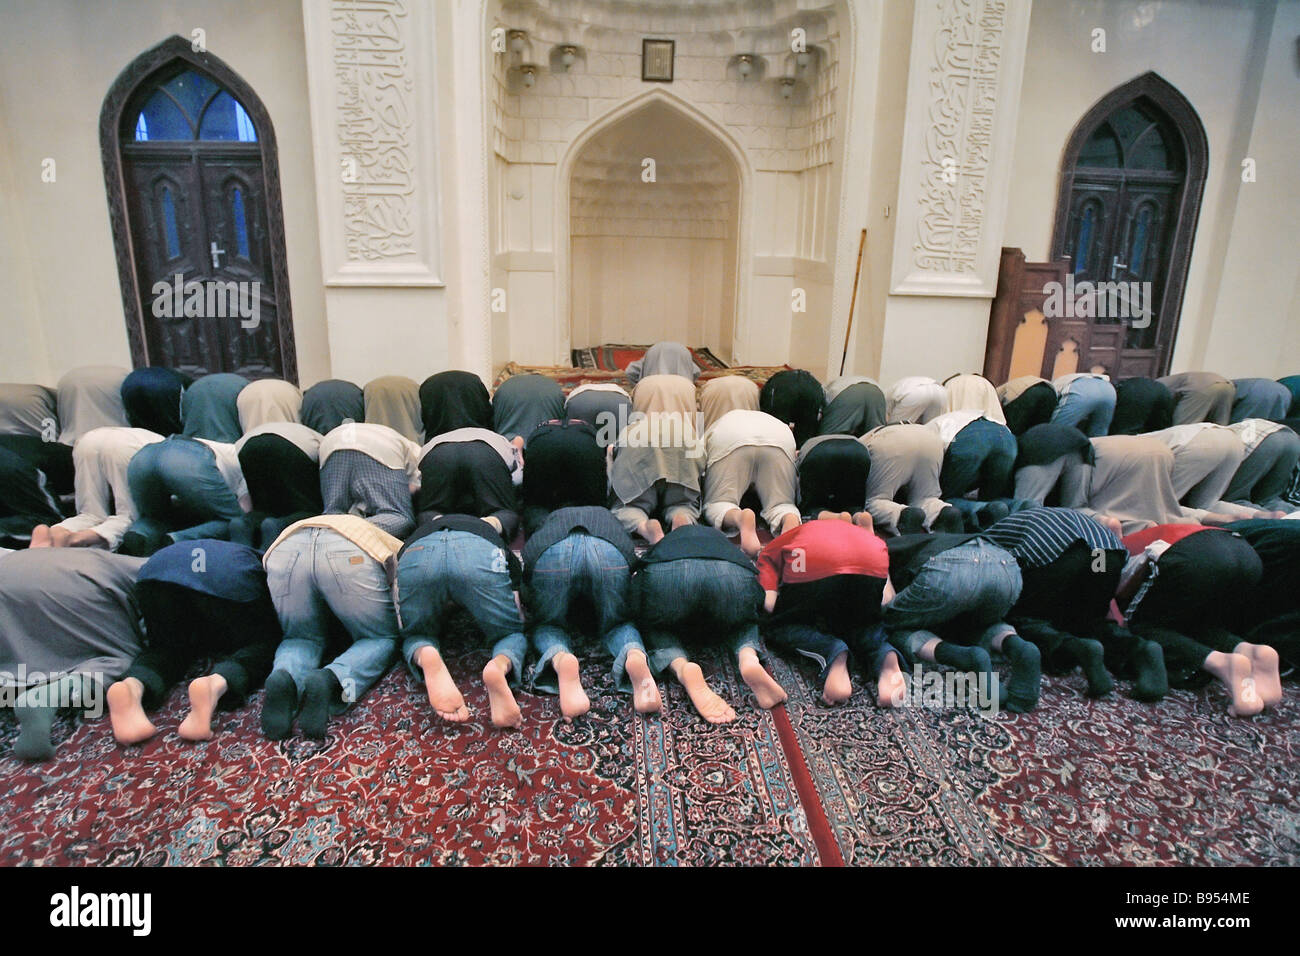 Притесненных мусульман. Поклонение мусульман. Мусульмане в мечети. Намаз в мечети. Поклонение в мечети.